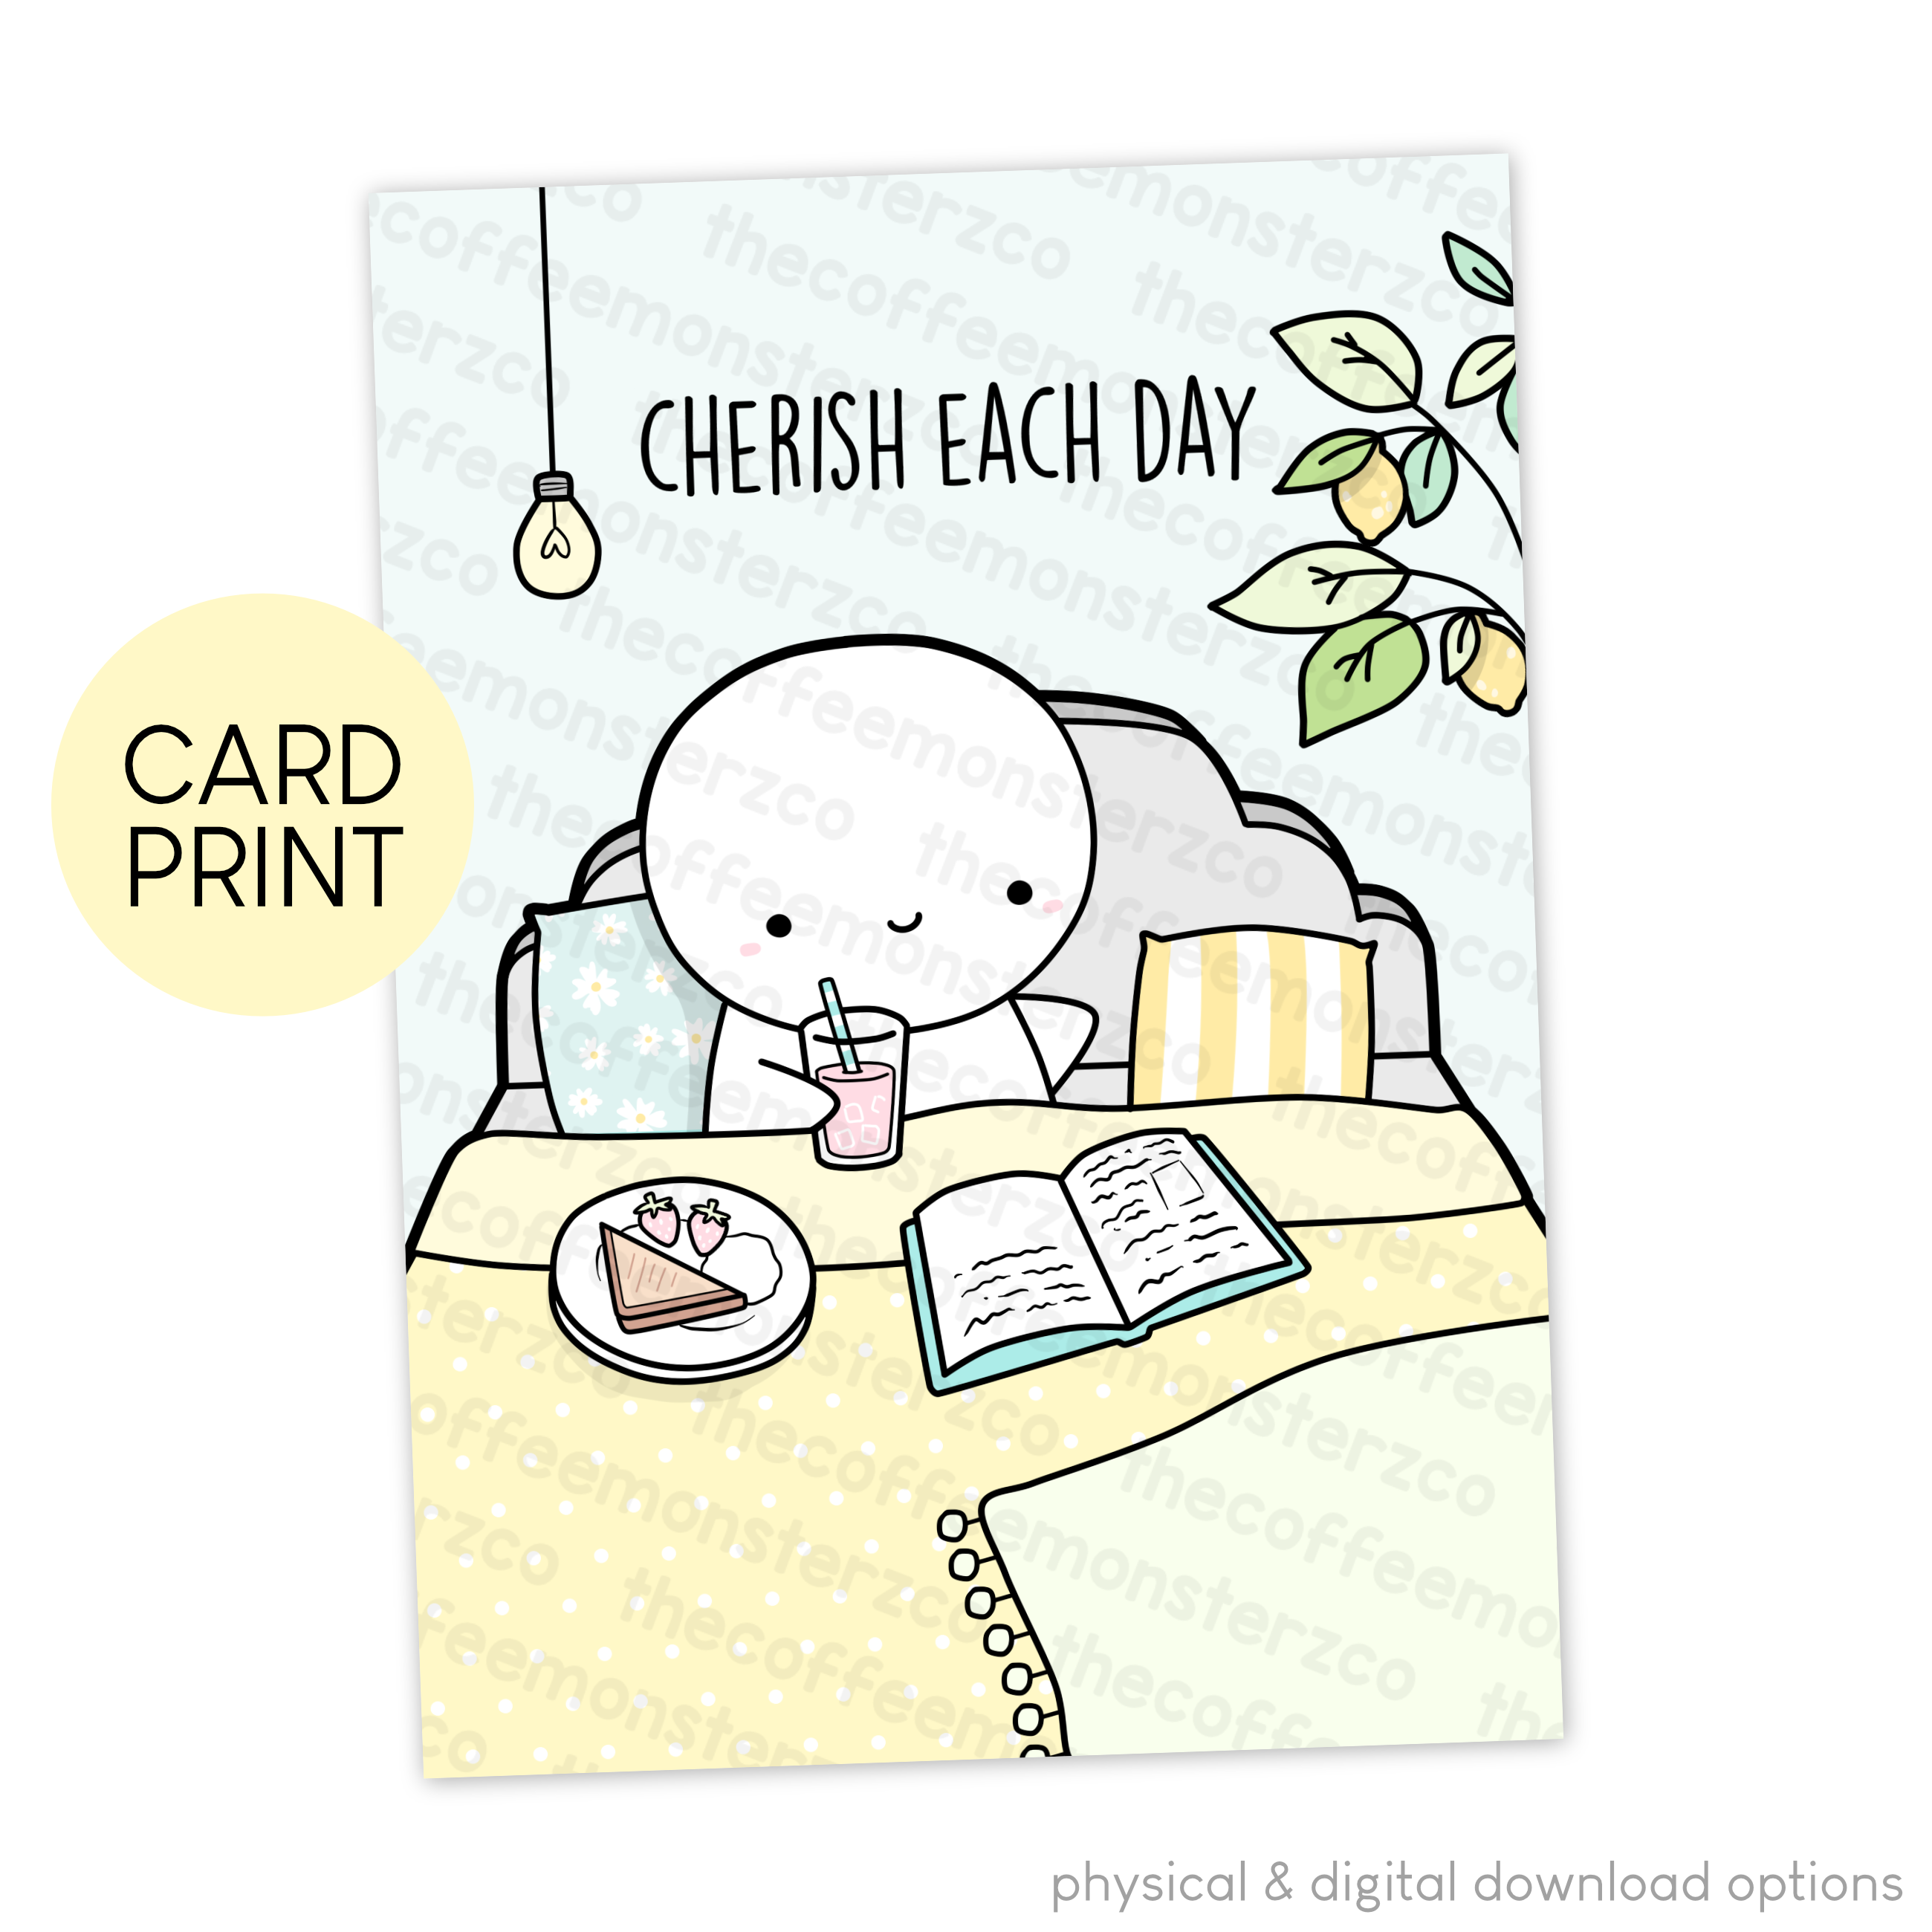 Cherish Each Day - Card Print